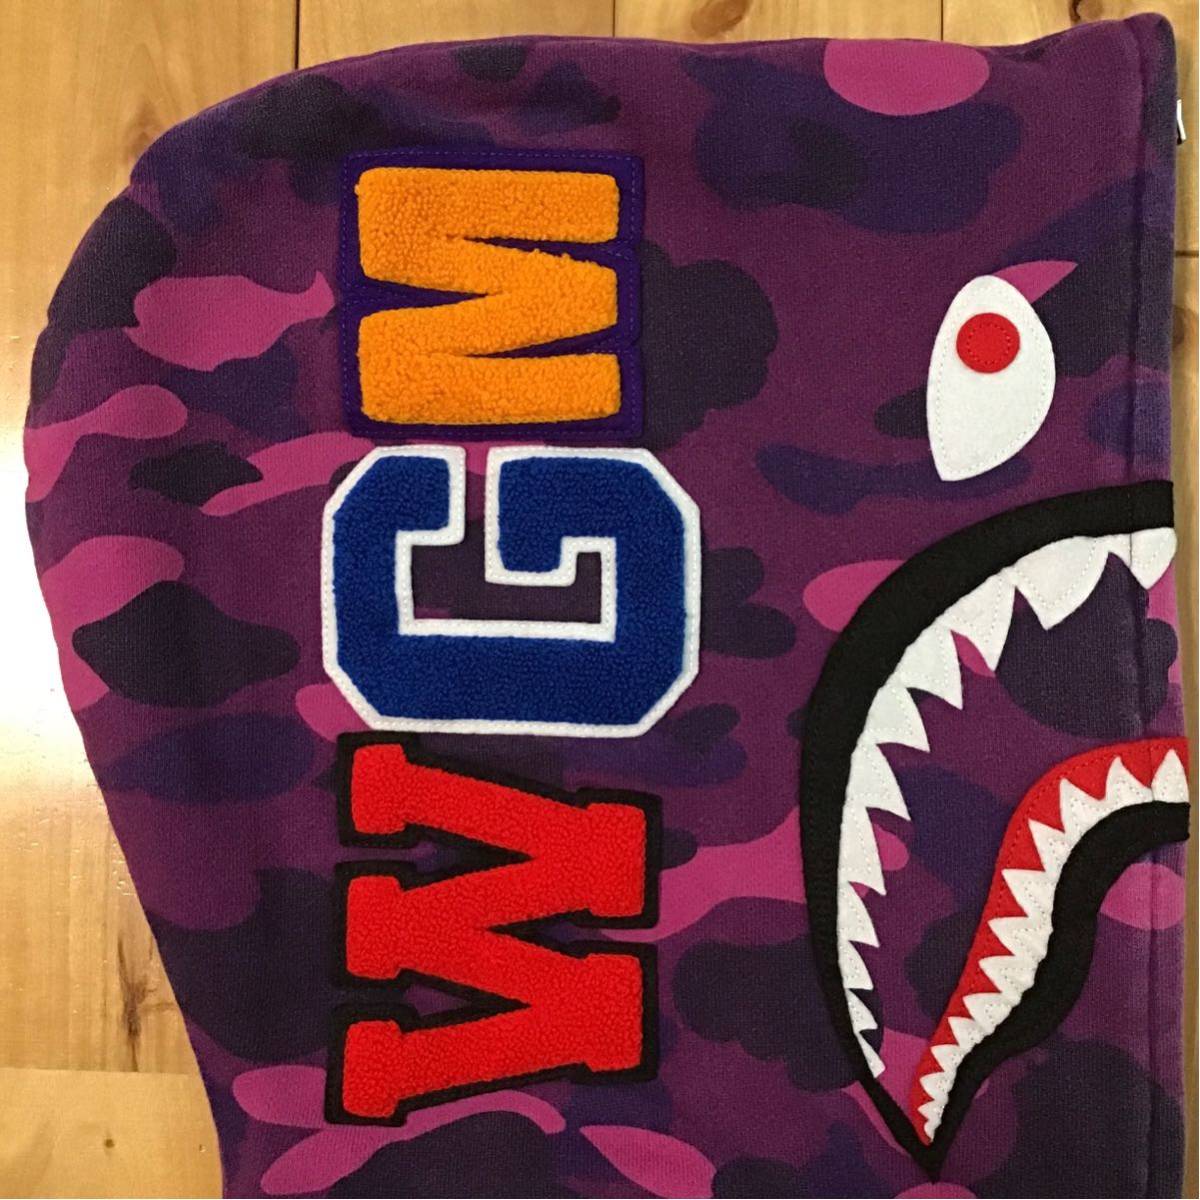 Purple camo シャーク パーカー Mサイズ shark full zip hoodie a